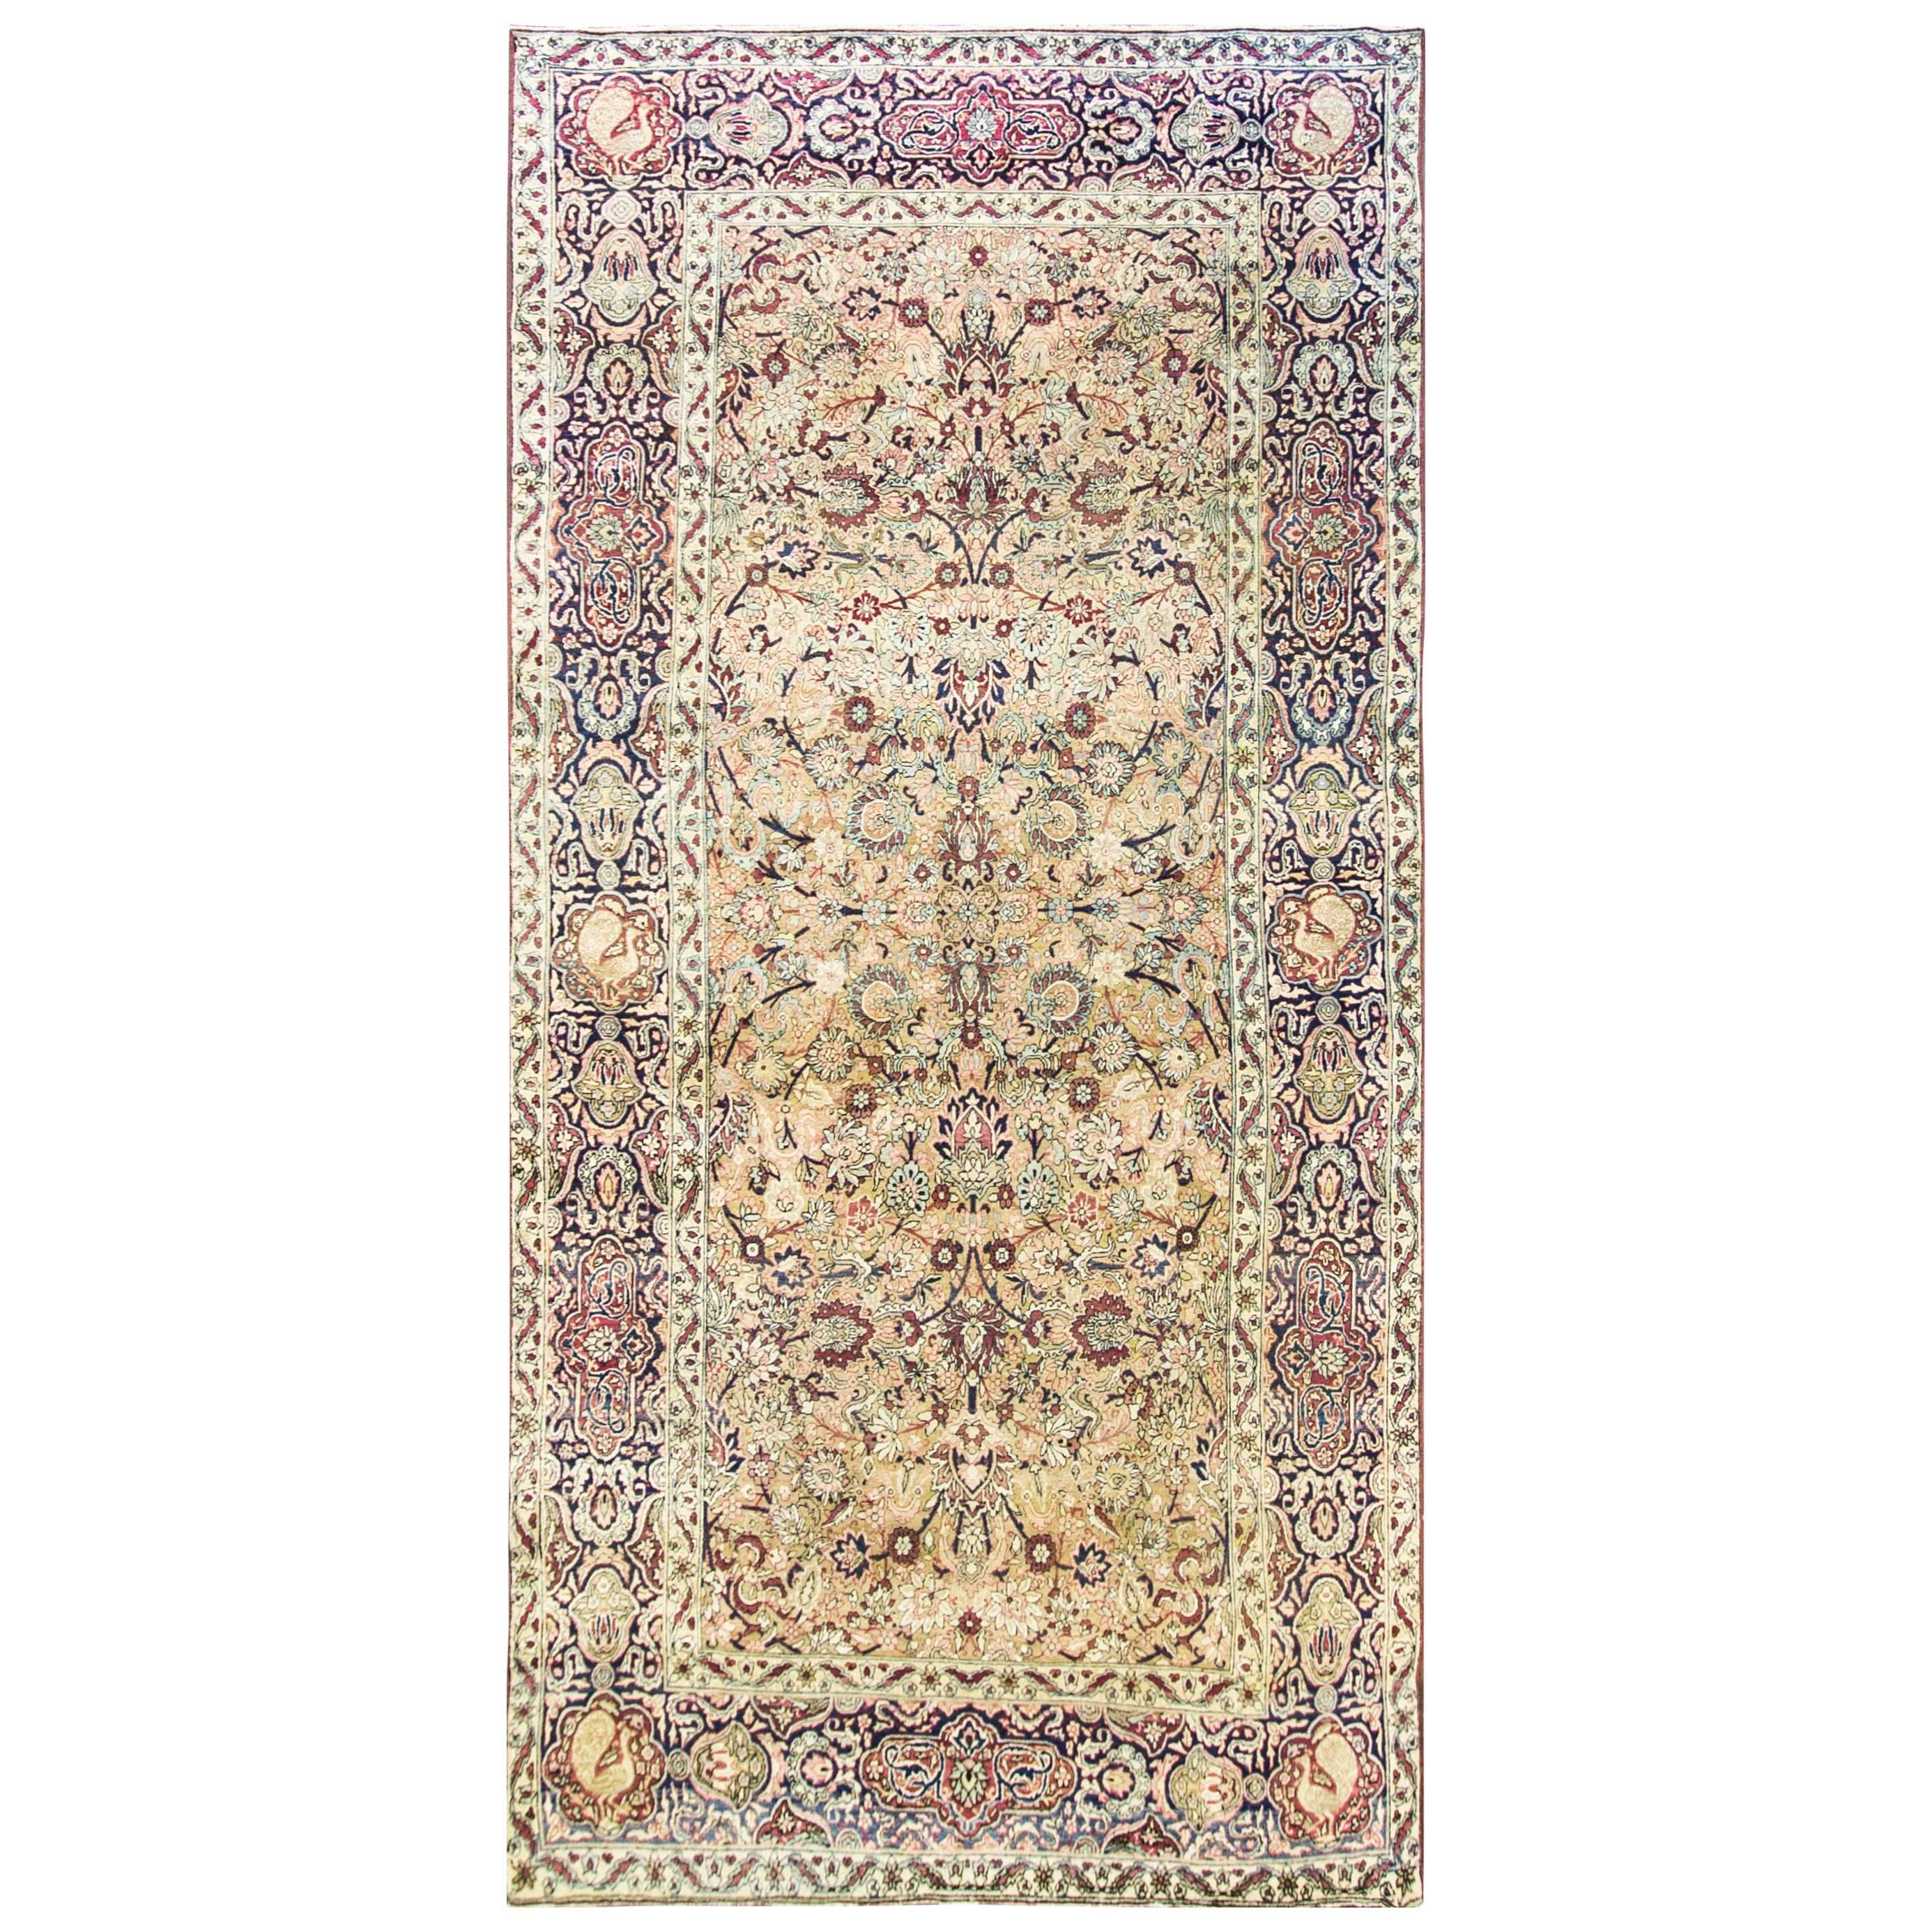  Antique Persian Kermanshah Carpet, 5'5" x 11'4" For Sale